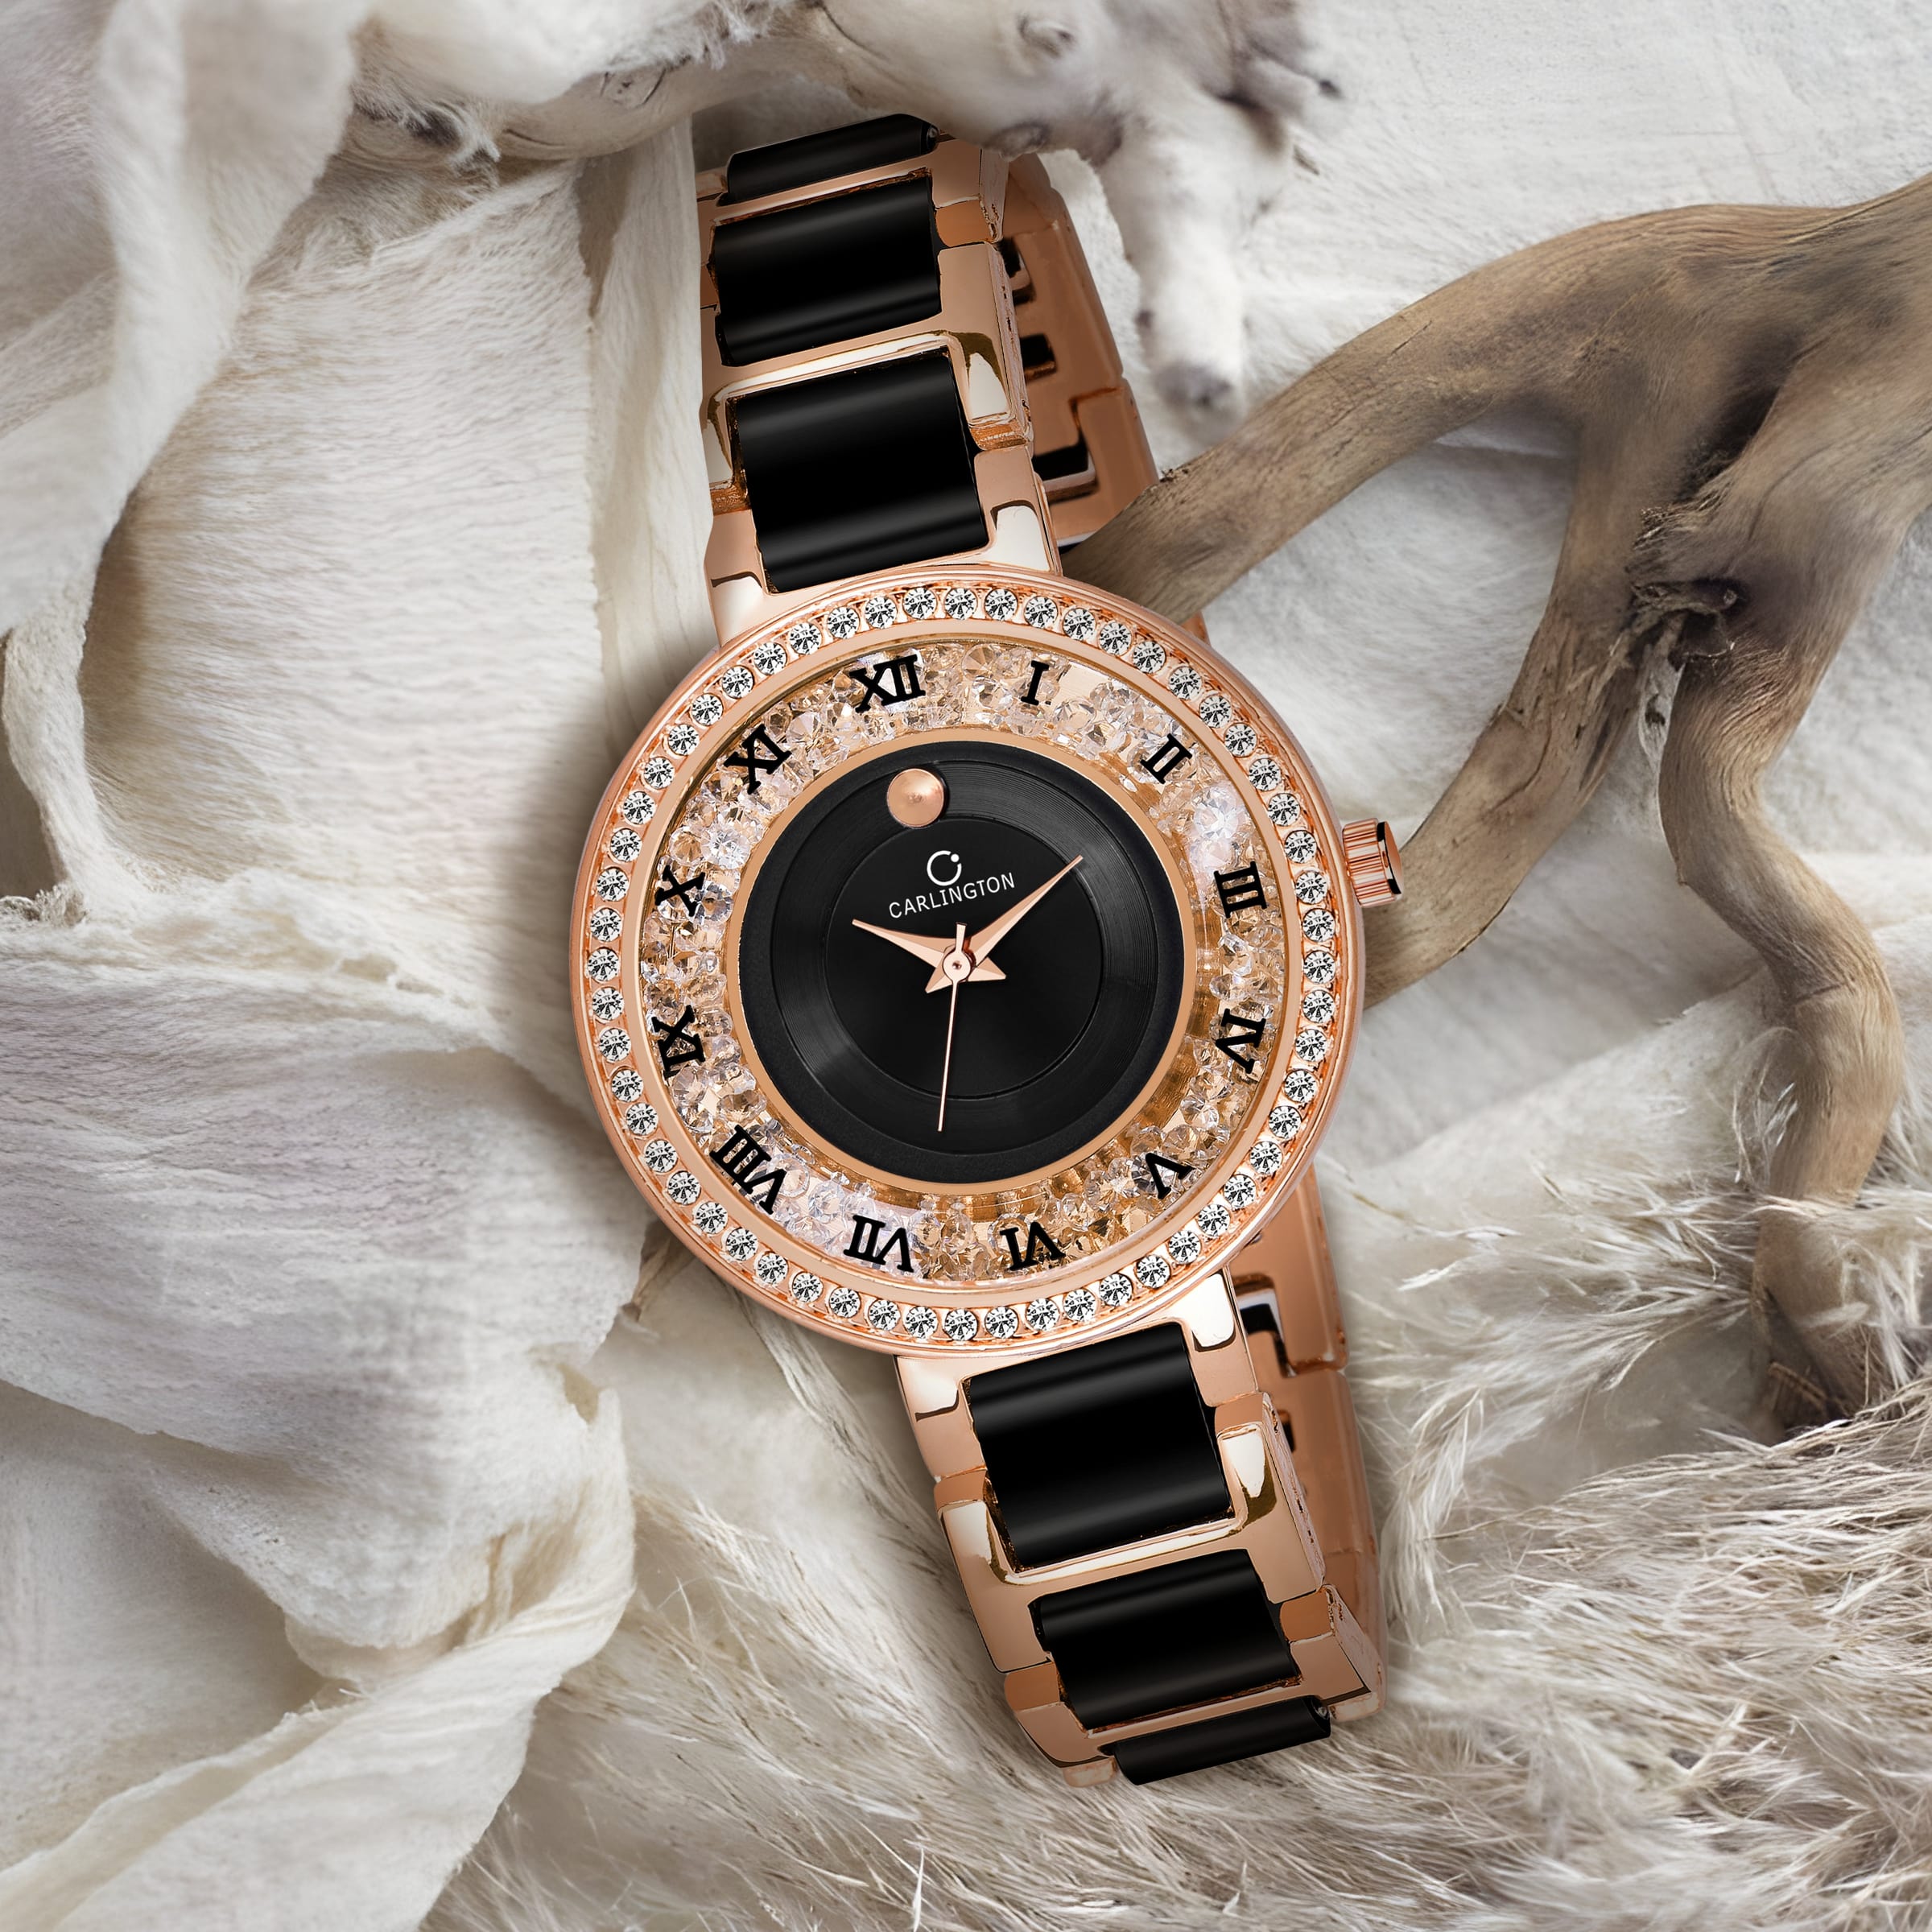 Carlington mova analog women's watch rosegold